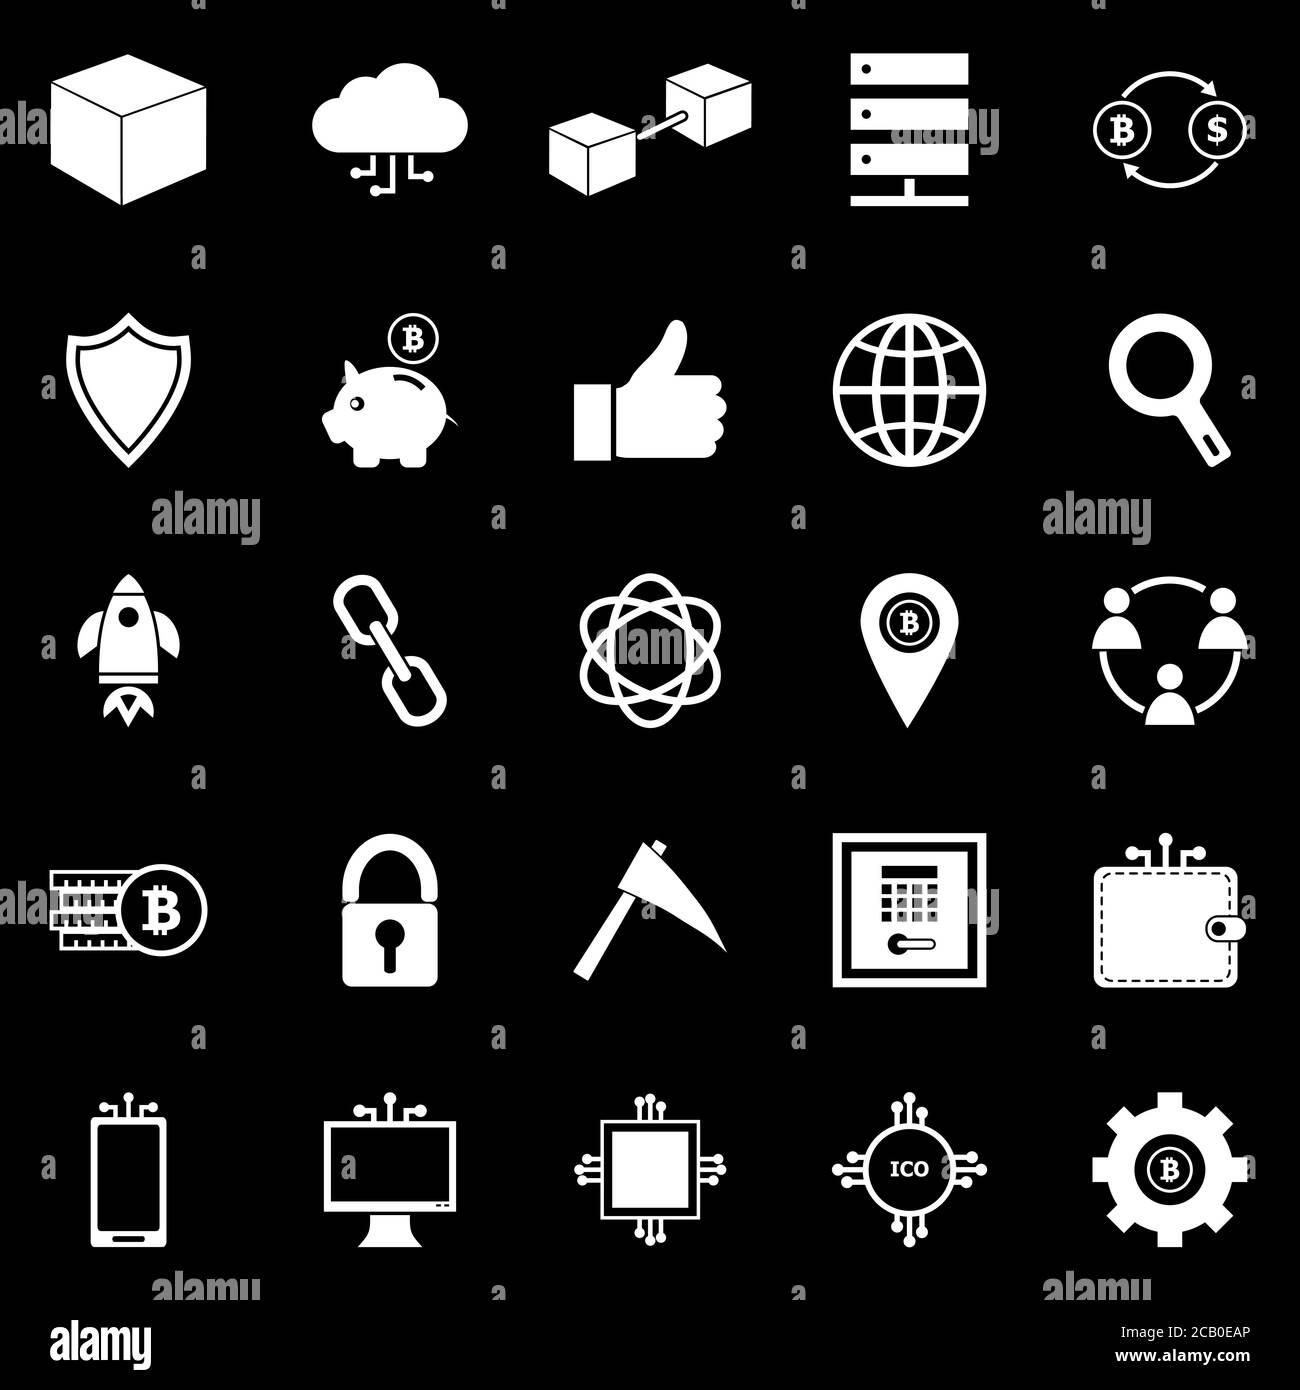 Blockchain icons on black background, stock vector Stock Vector